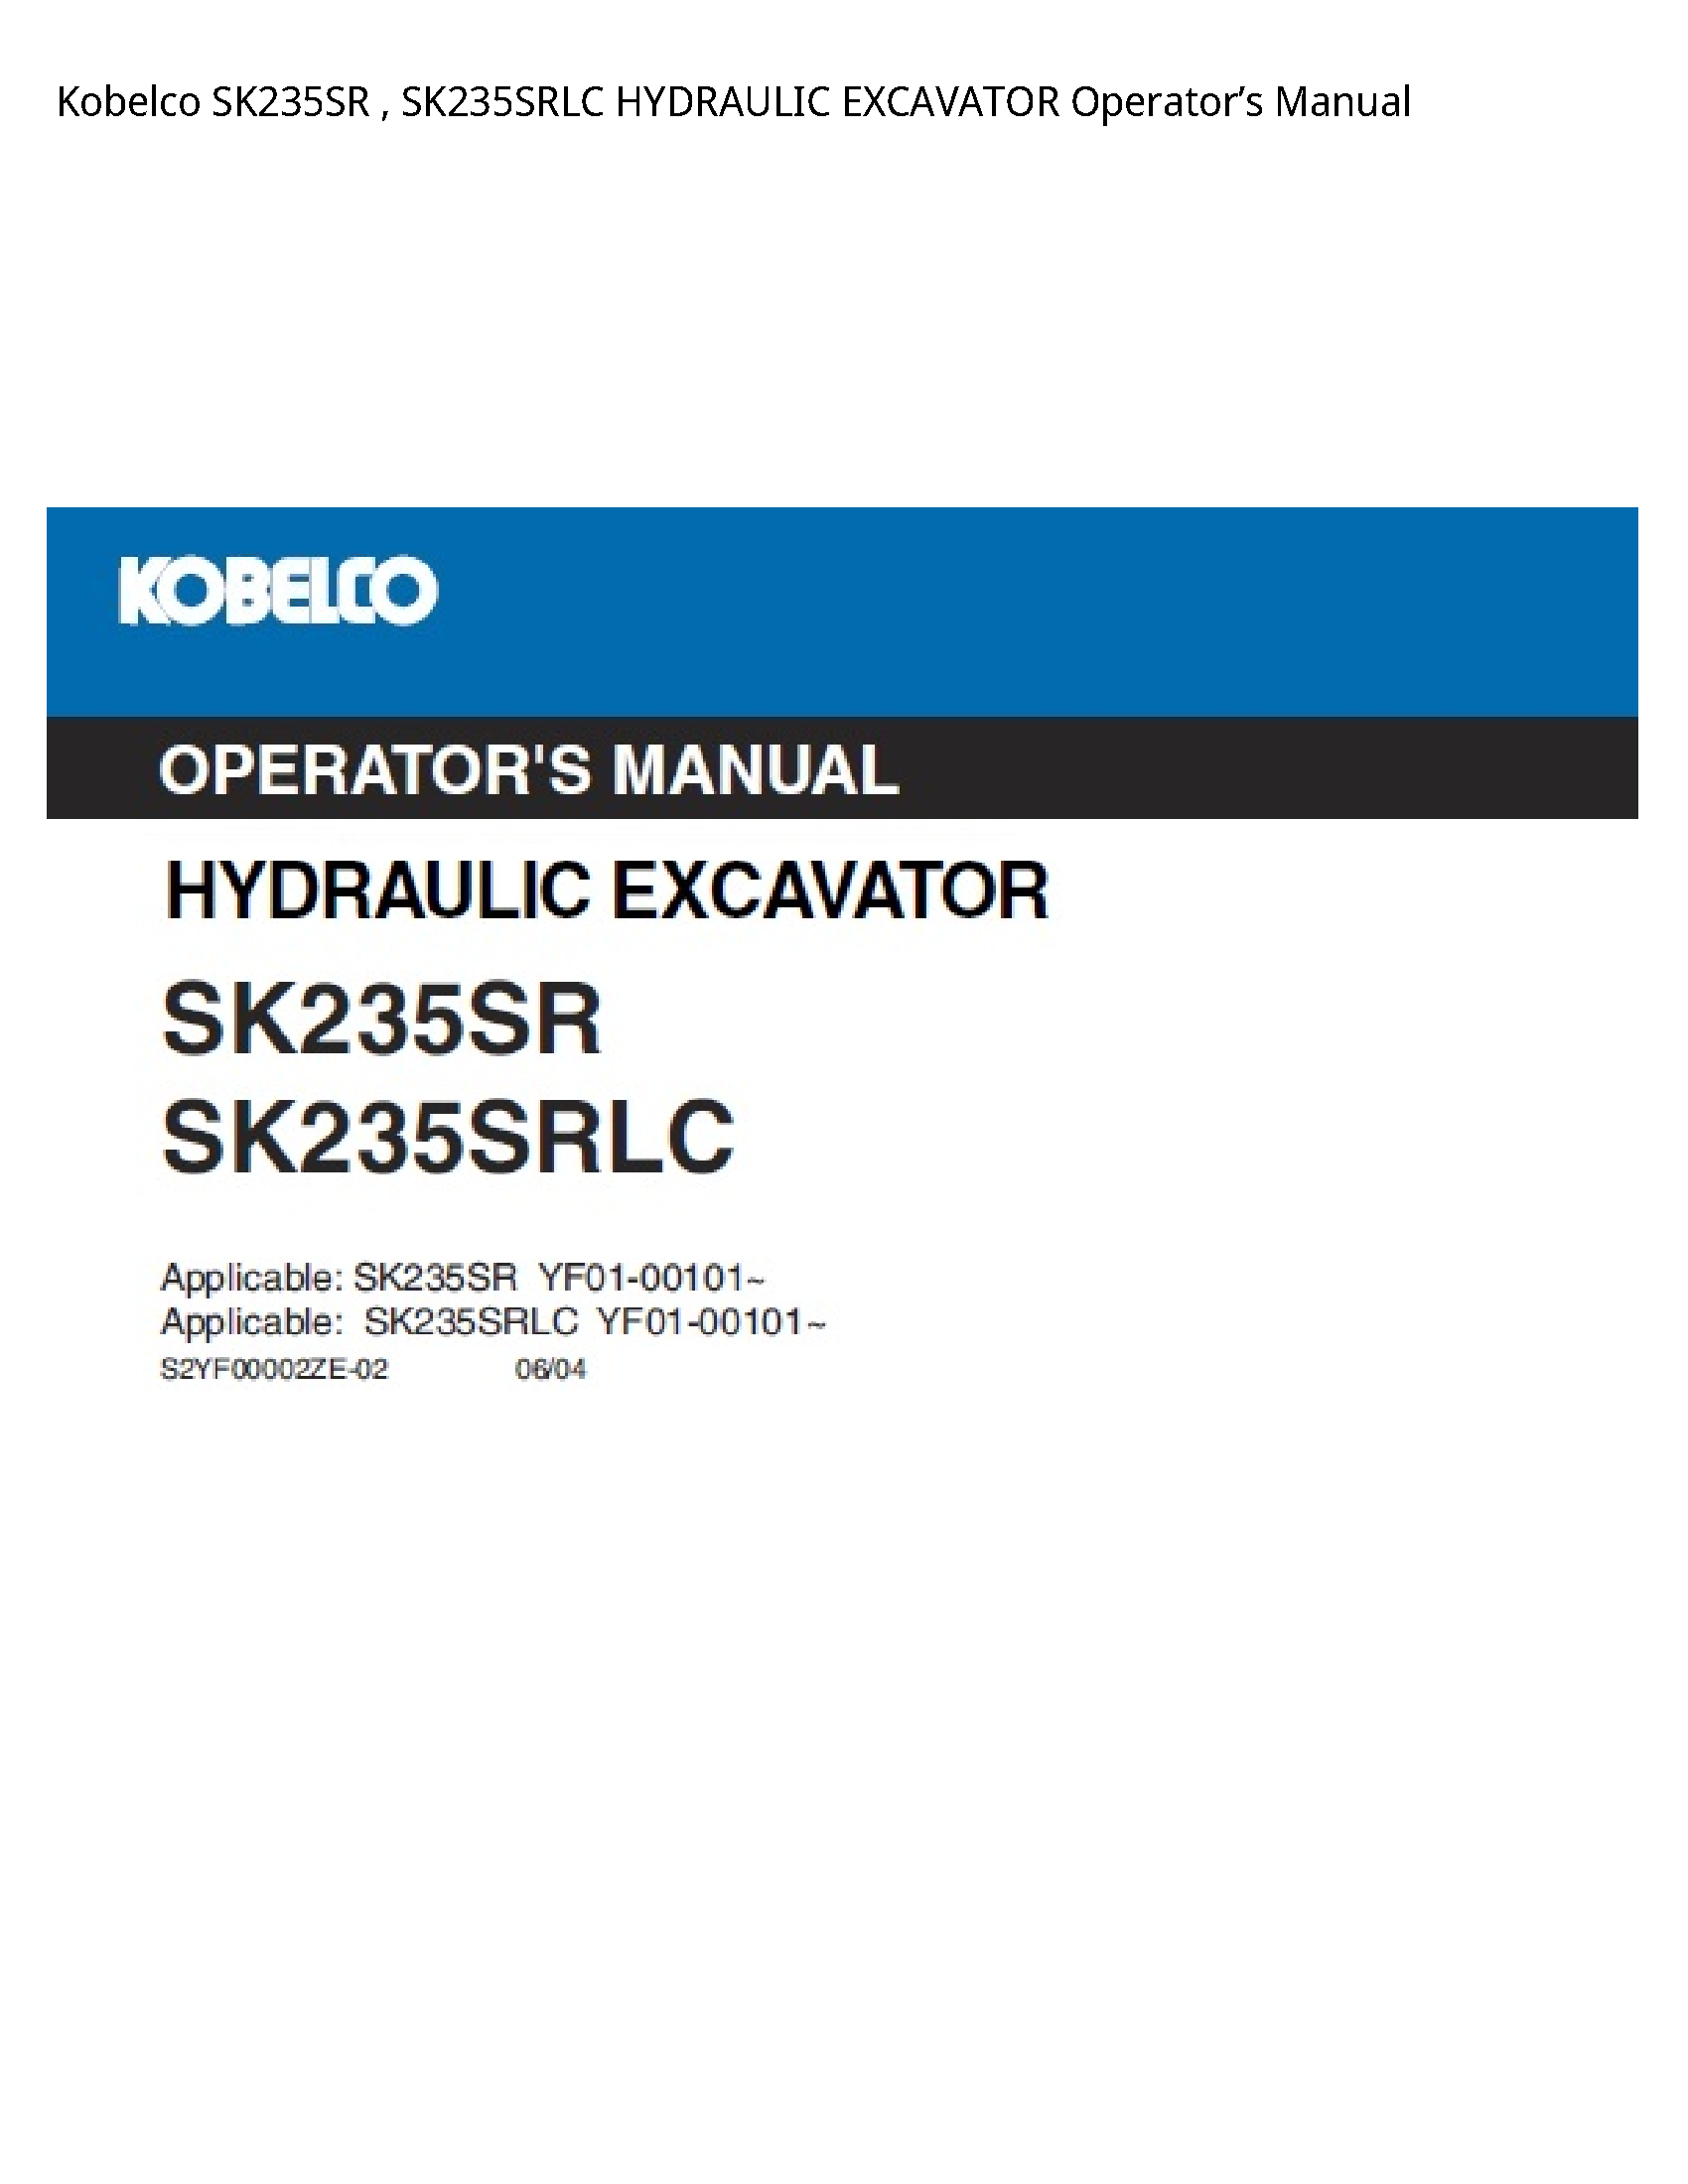 Kobelco SK235SR HYDRAULIC EXCAVATOR Operator’s manual